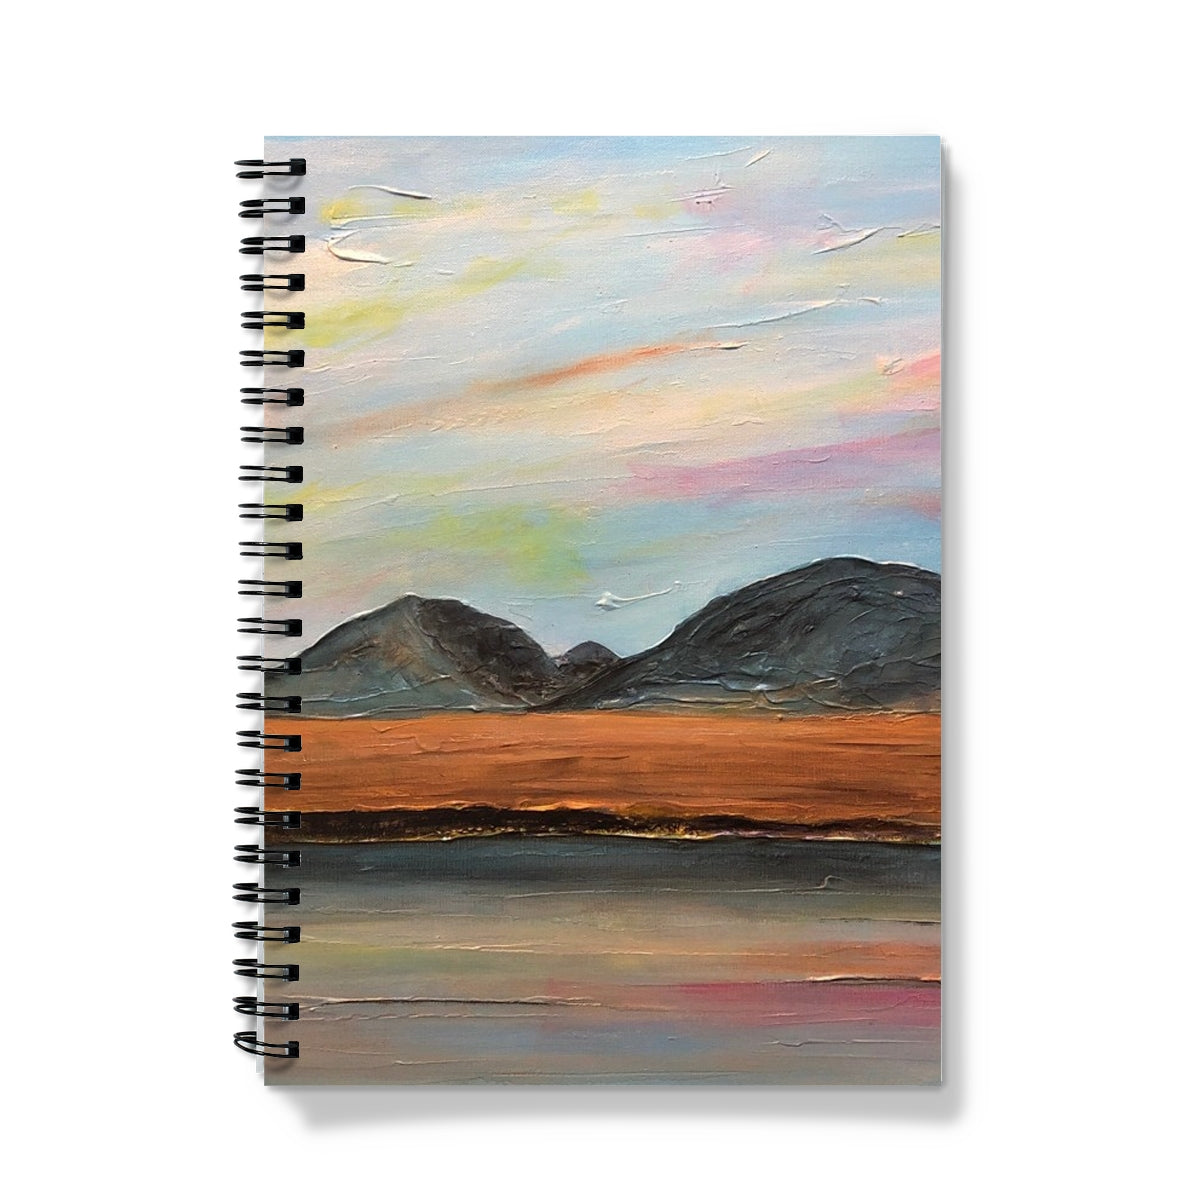 Jura Dawn Art Gifts Notebook-Journals & Notebooks-Hebridean Islands Art Gallery-A4-Lined-Paintings, Prints, Homeware, Art Gifts From Scotland By Scottish Artist Kevin Hunter